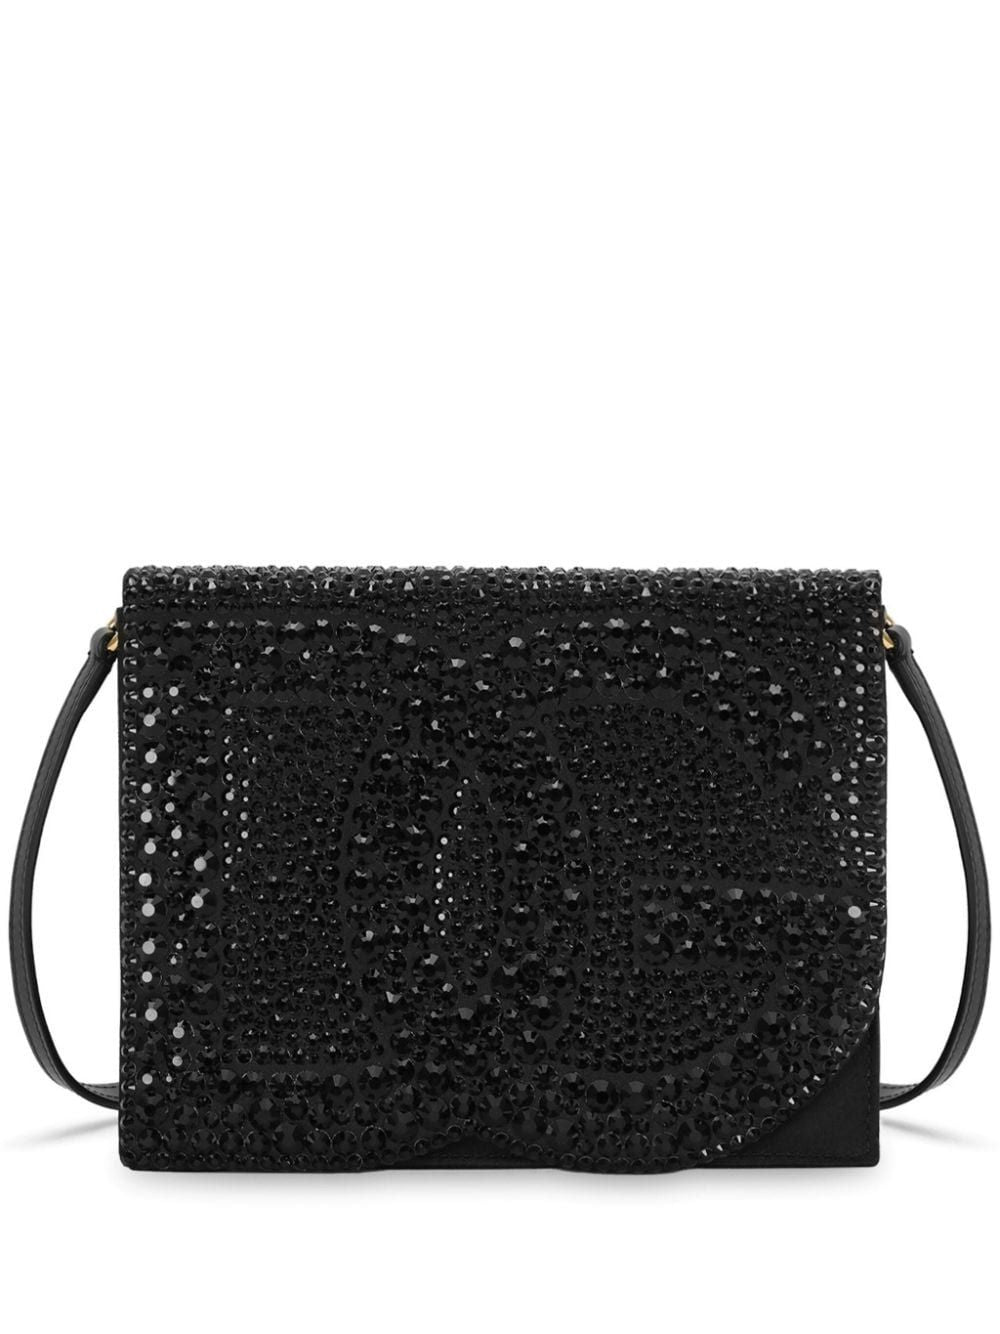 DOLCE & GABBANA Black Crystal-Encrusted Handbag with Embossed DG Logo